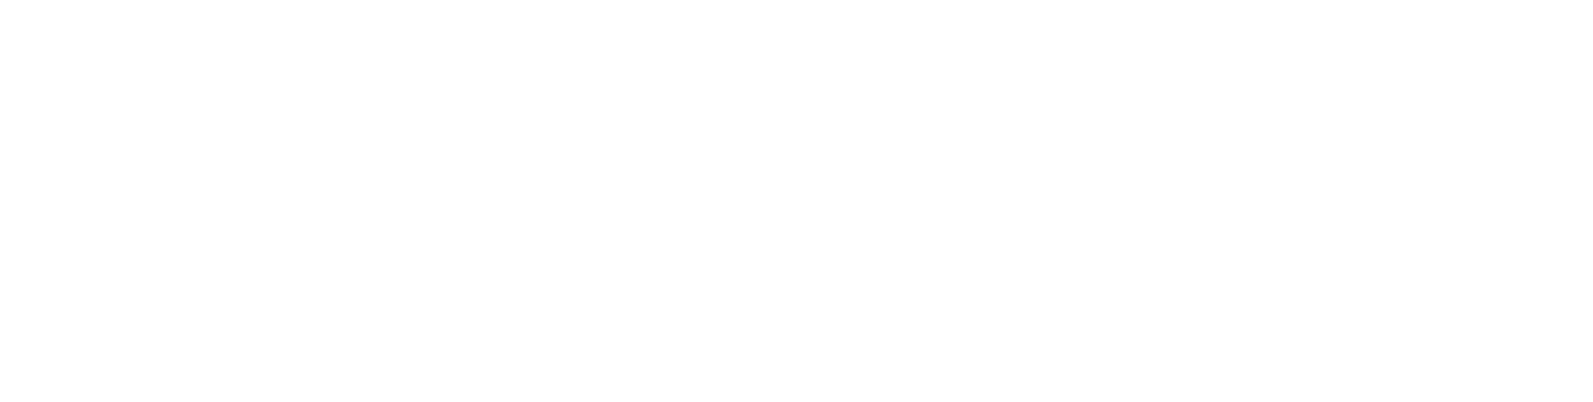 Hooker Furniture logo grand pour les fonds sombres (PNG transparent)